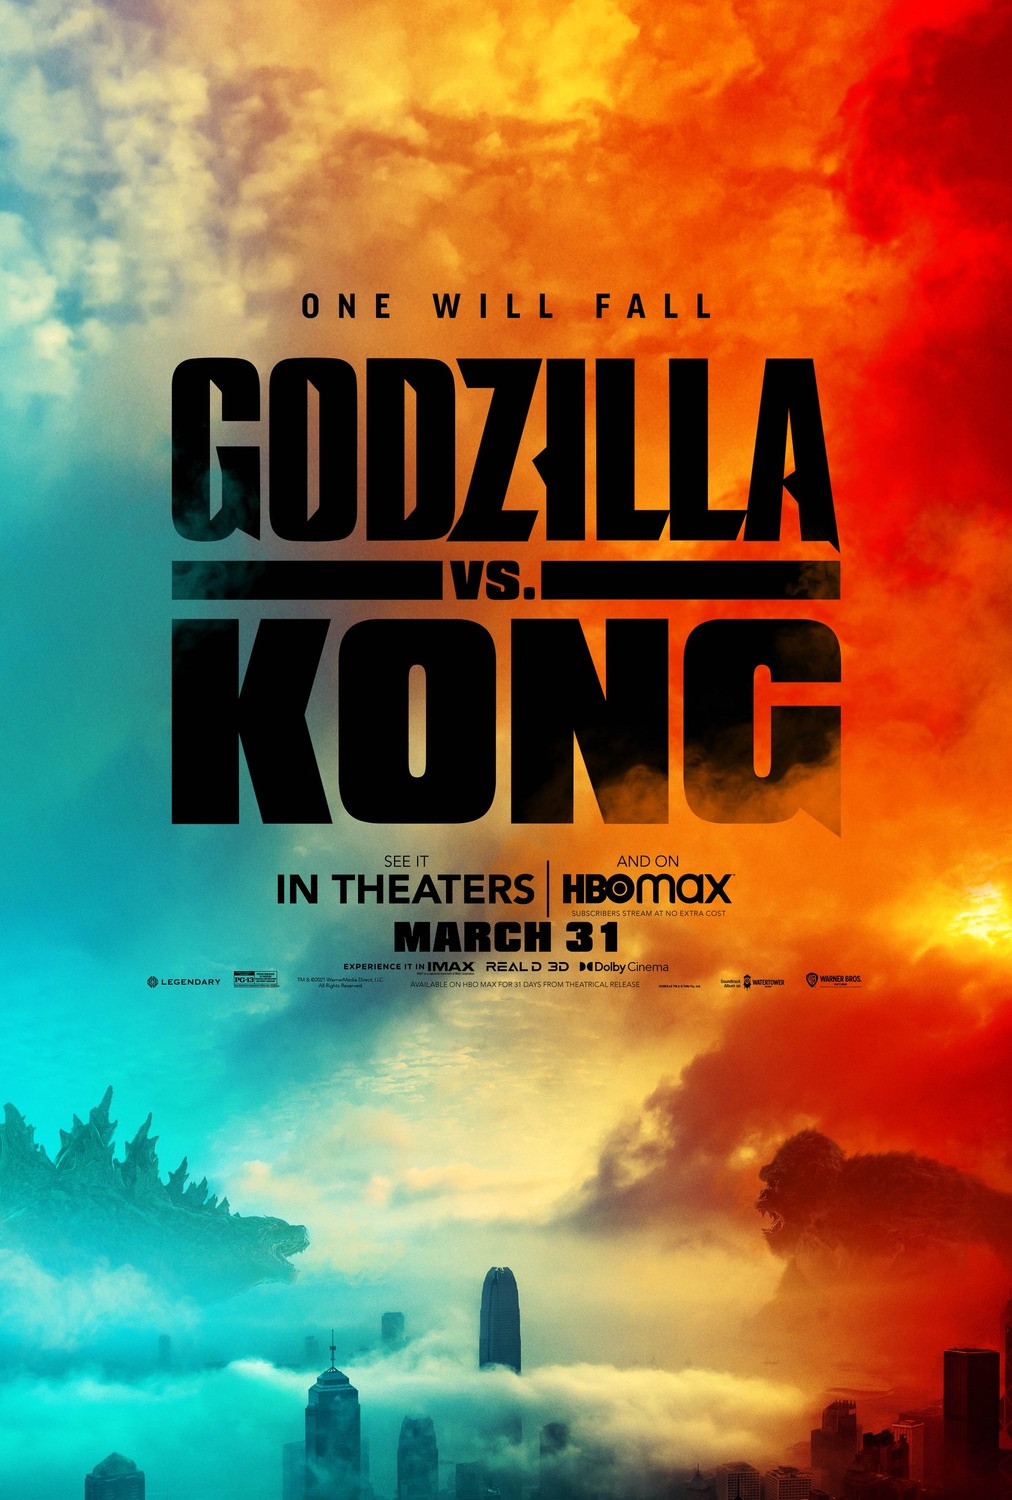 Godzilla vs. Kong tops box office 